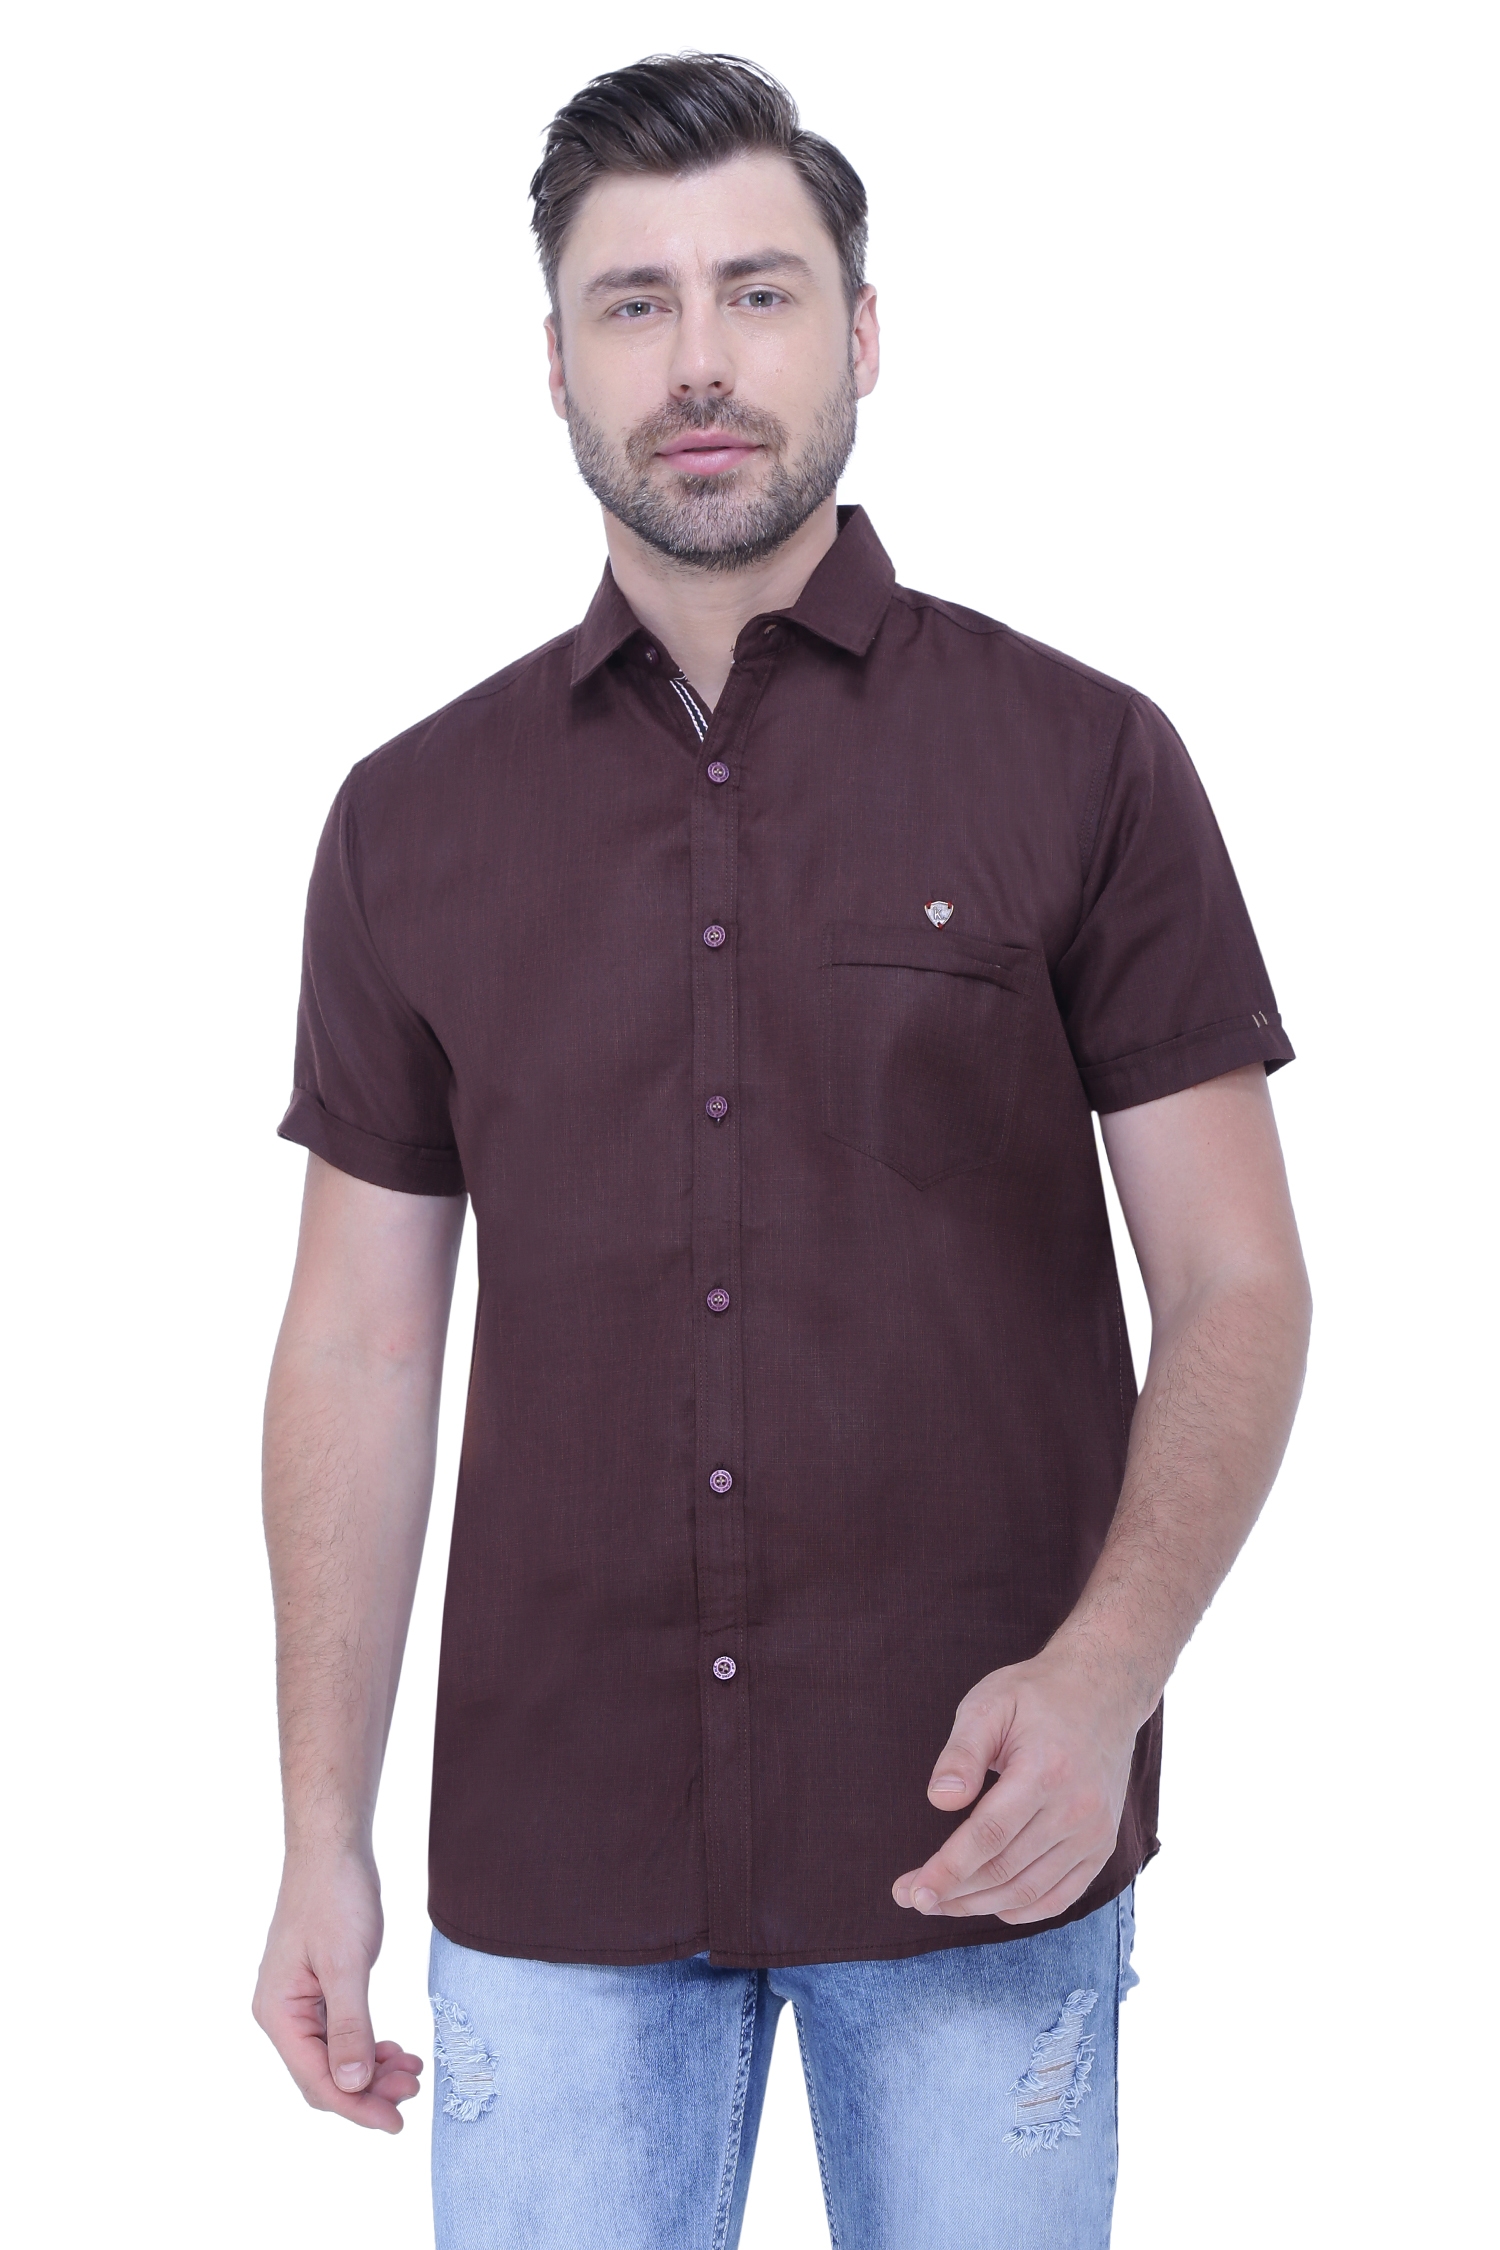 Kuons Avenue | Kuons Avenue Men's Linen Blend Half Sleeves Casual Shirt-KACLHS1240